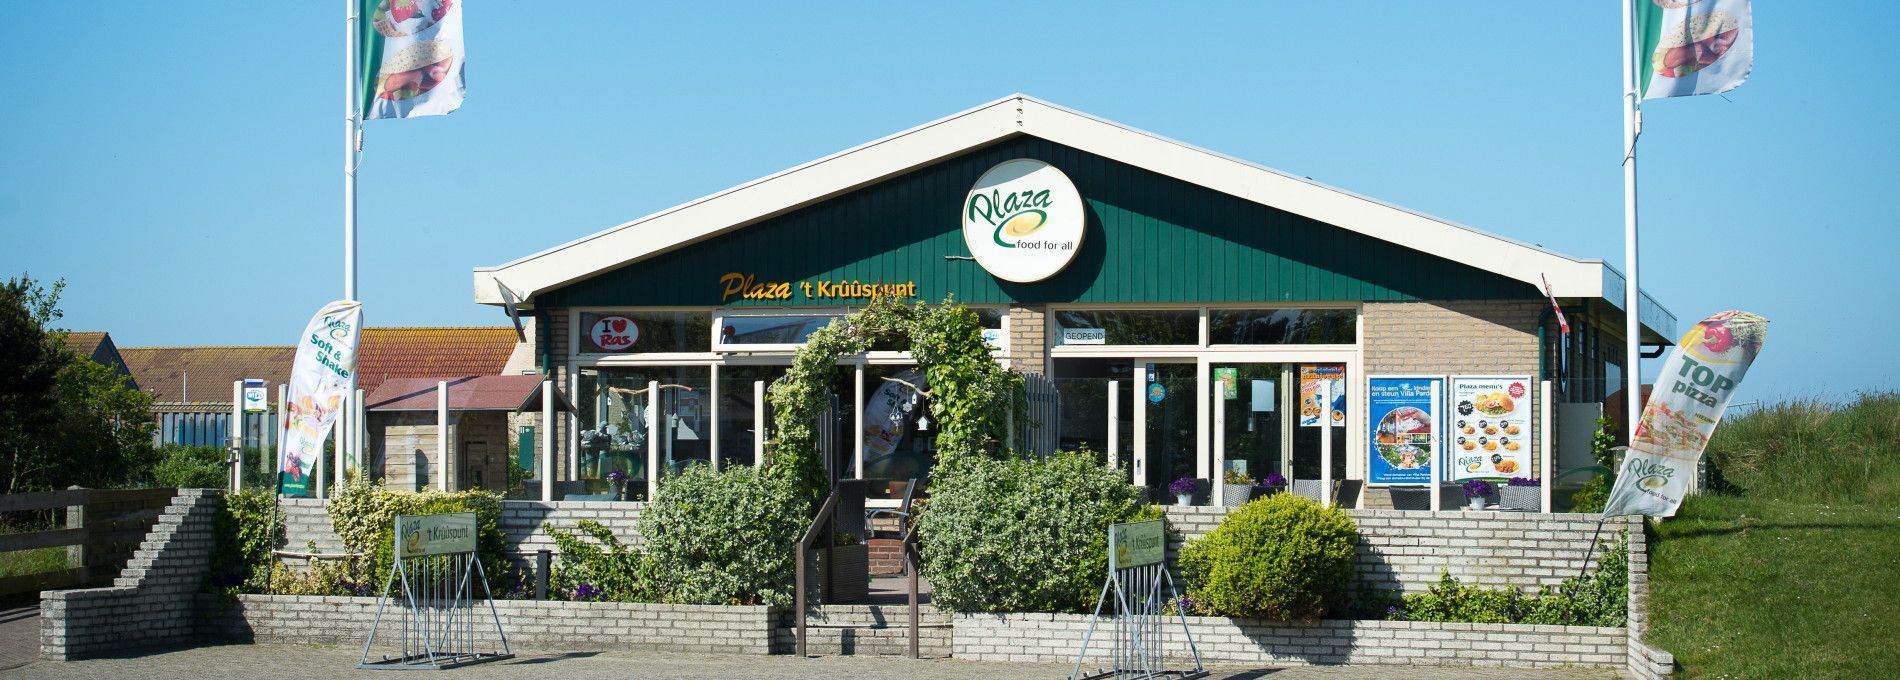 Cafetaria Plaza 't Kruuspunt - VVV Ameland